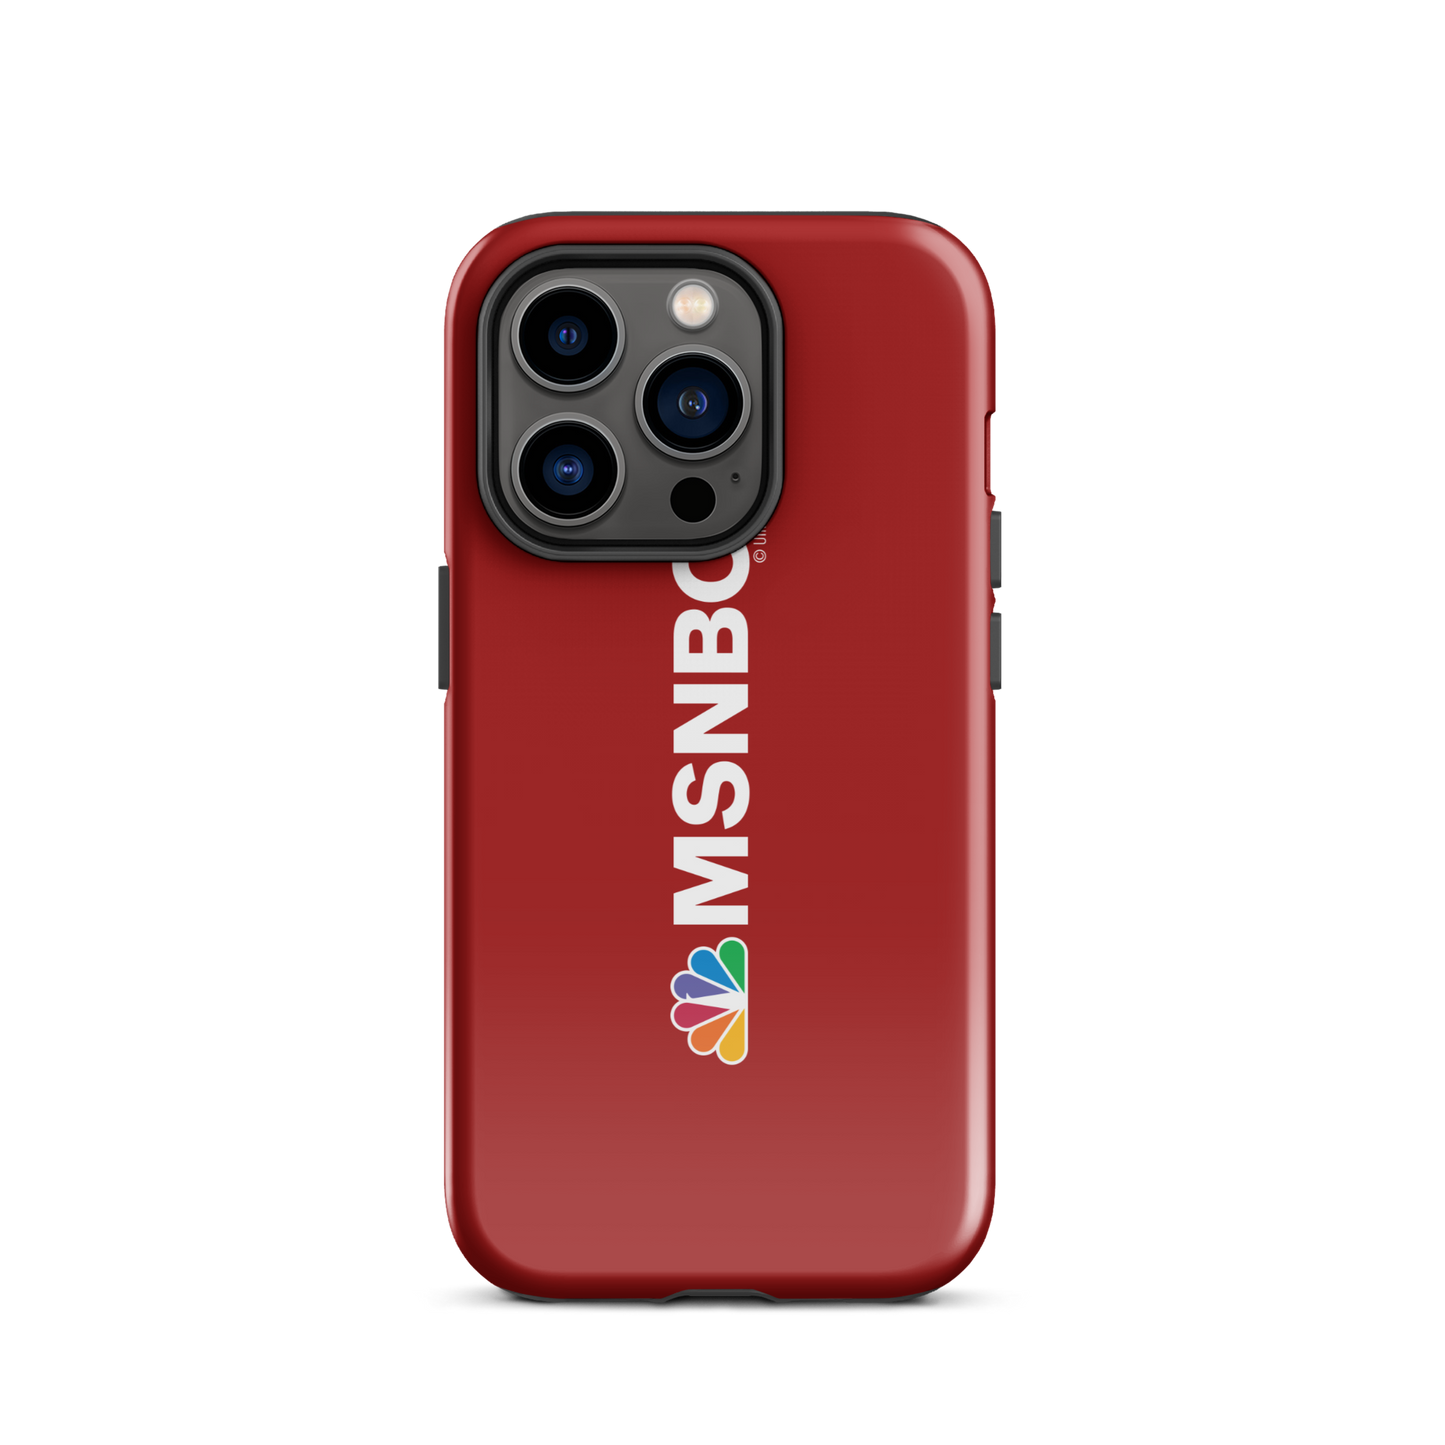 MSNBC Gear Logo Tough Phone Case - iPhone